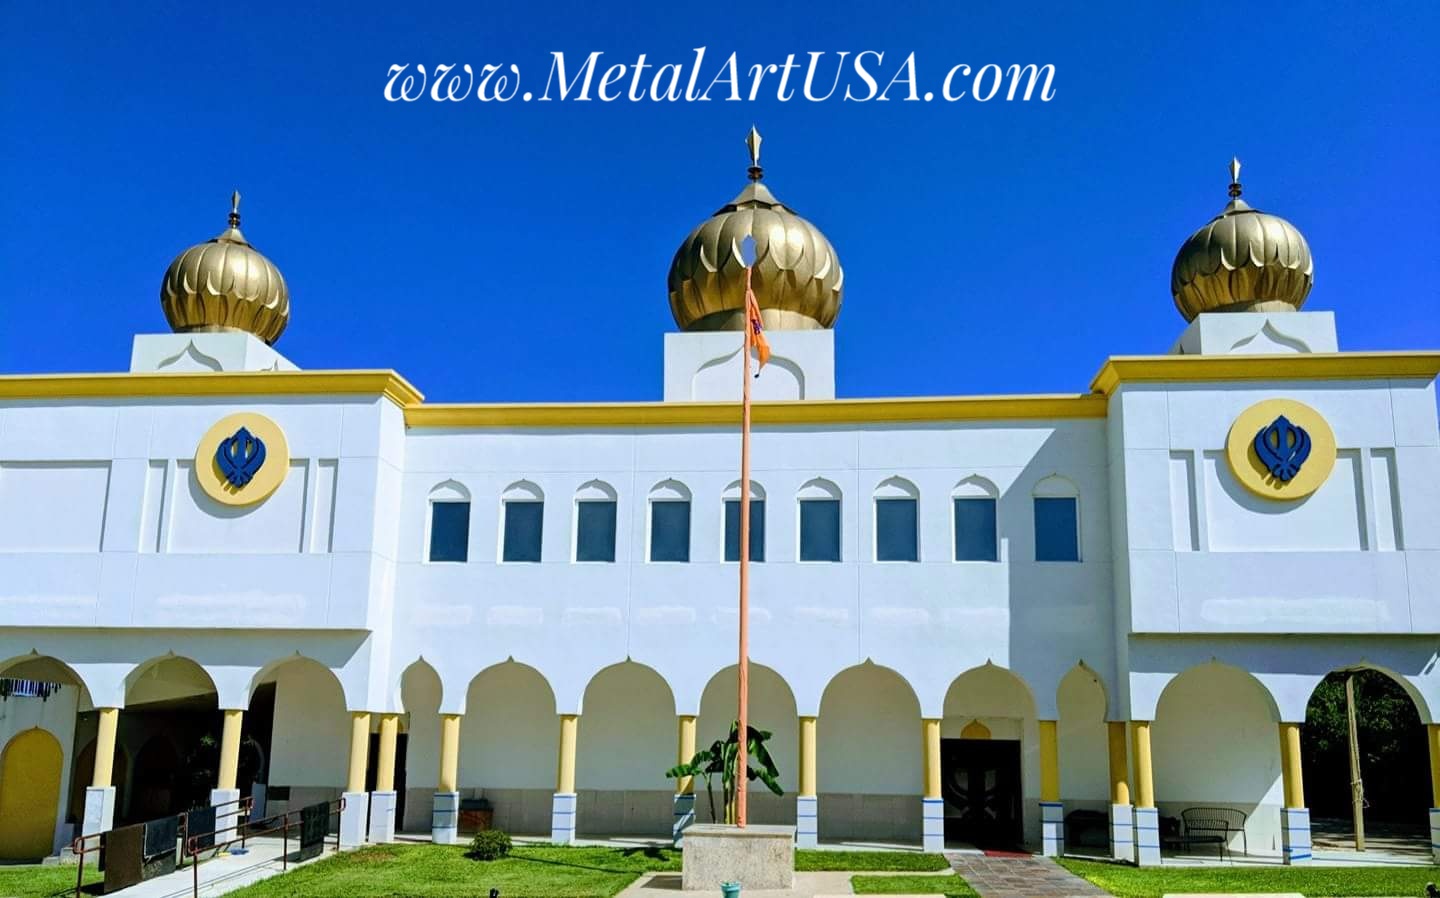 [Custom Sikh Dome Designs]